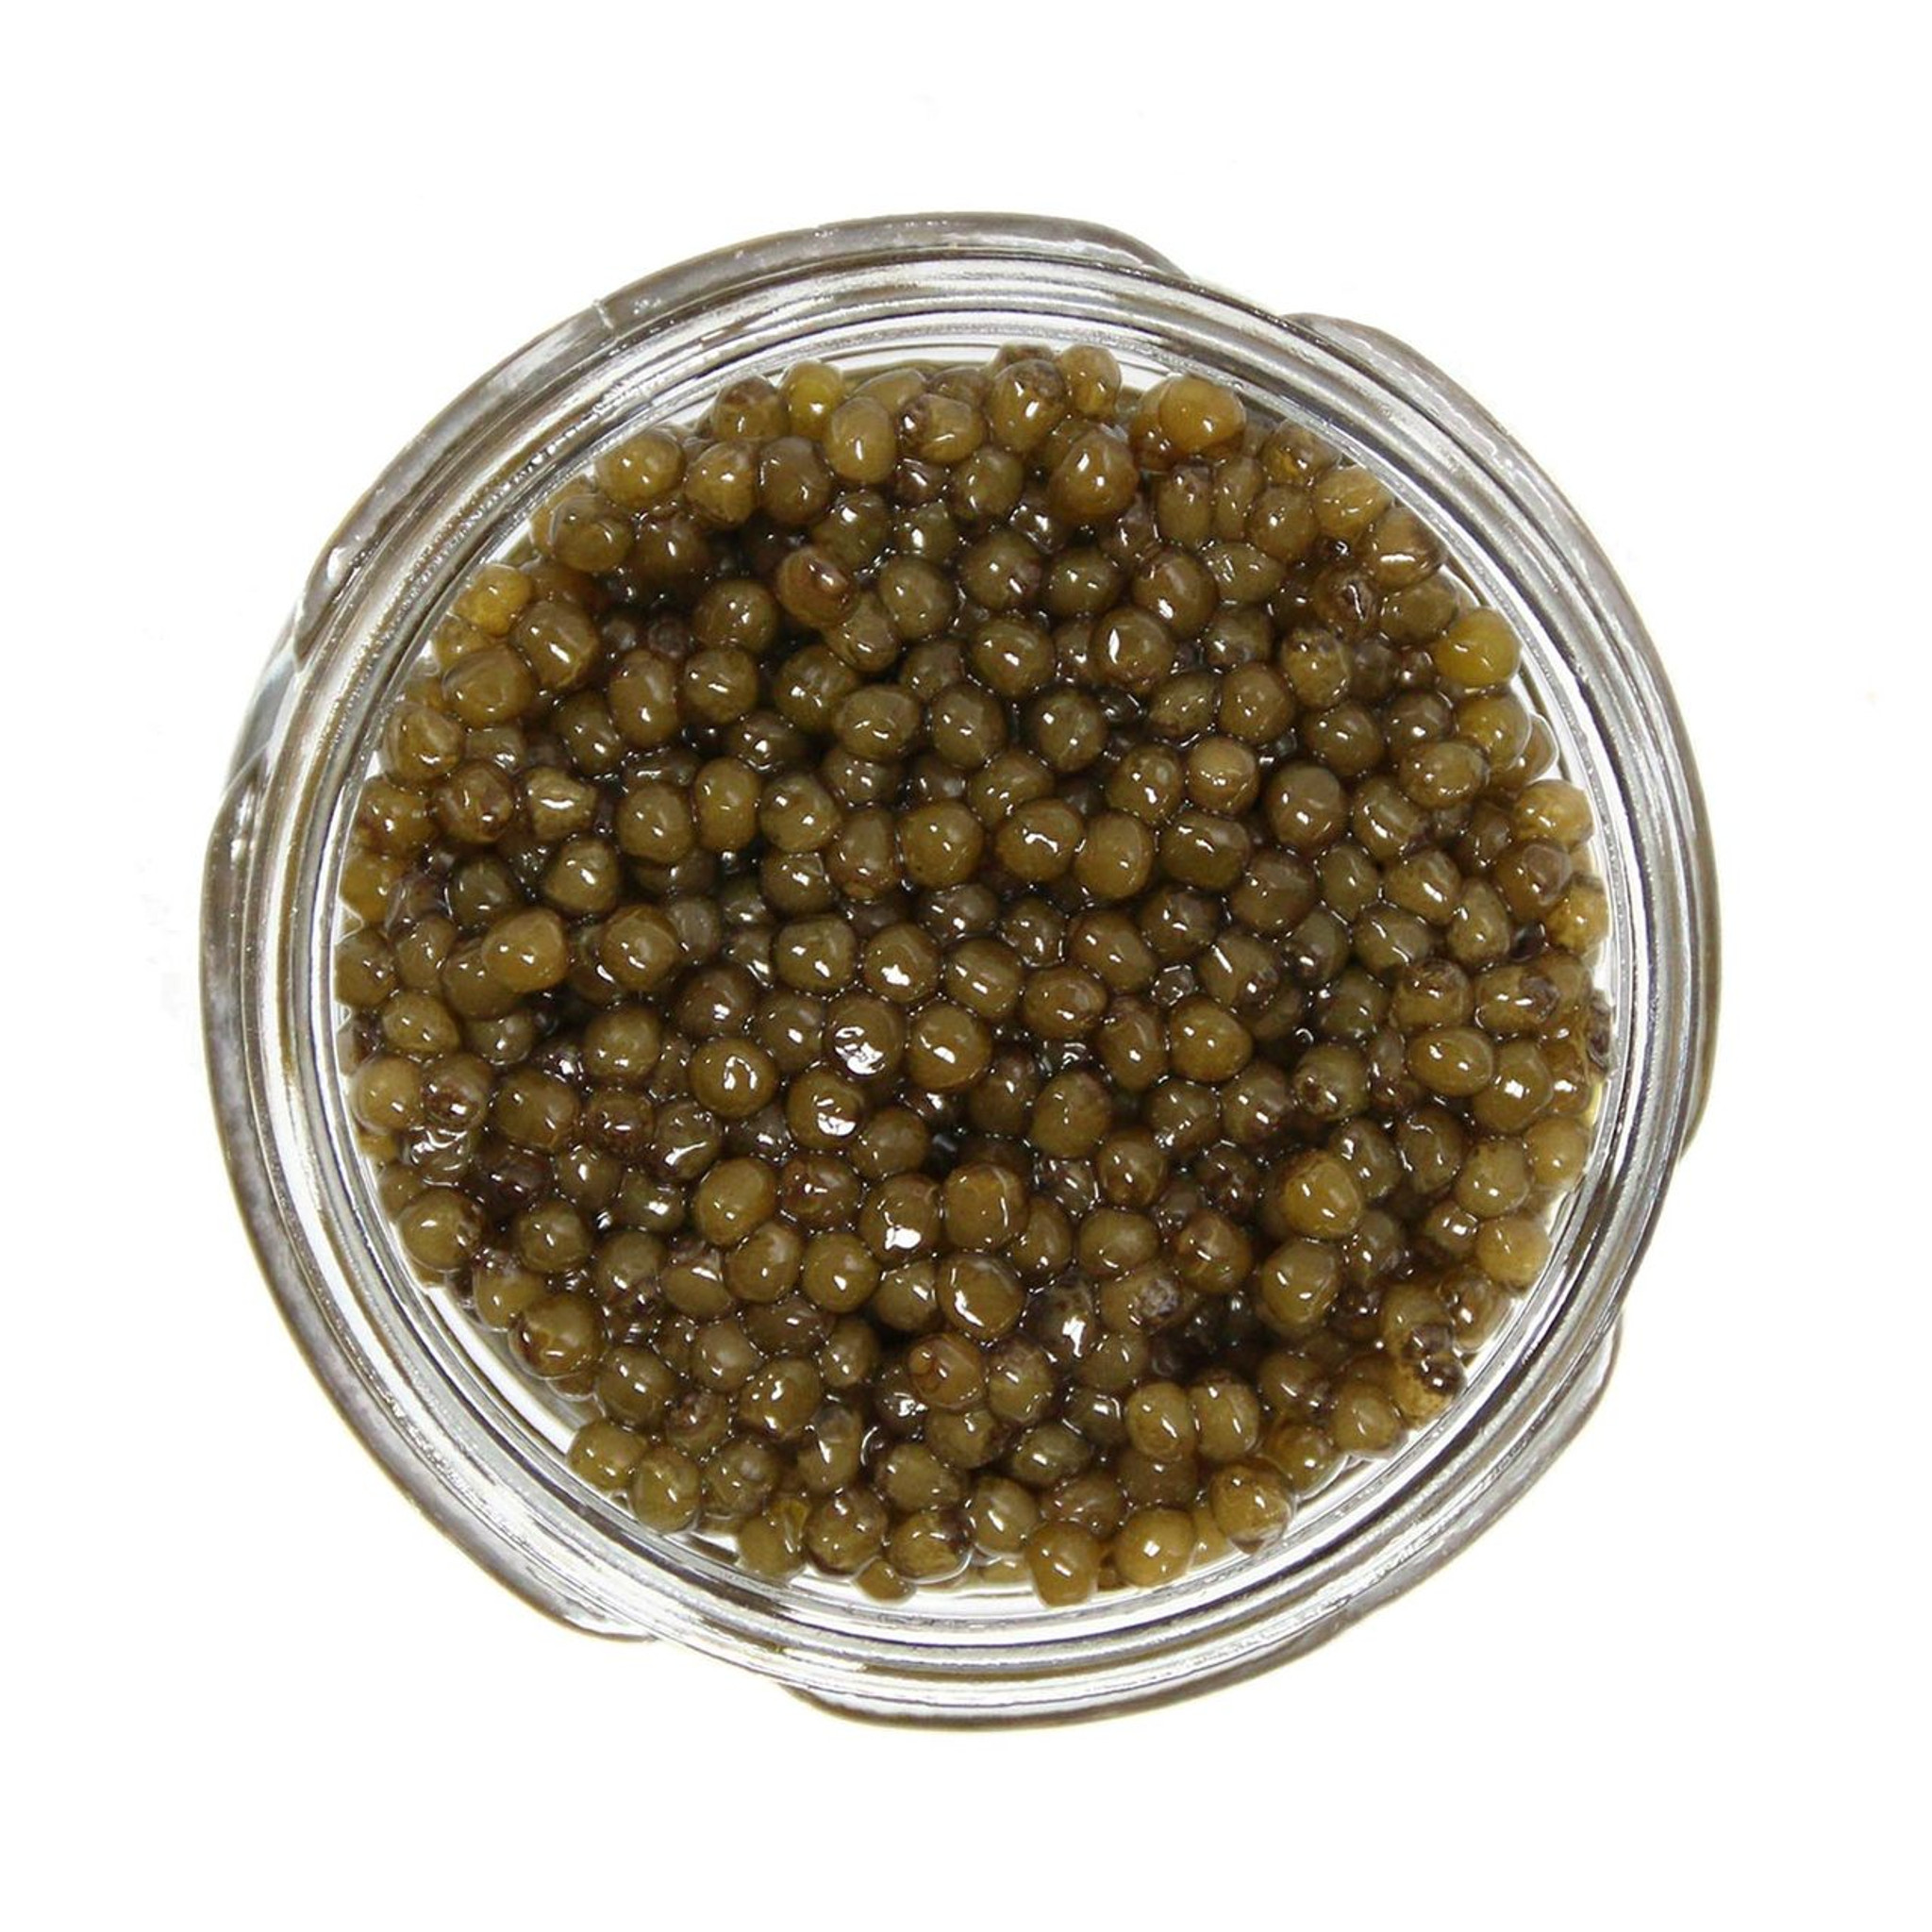 Oscietra Caviar - The Truffle Company